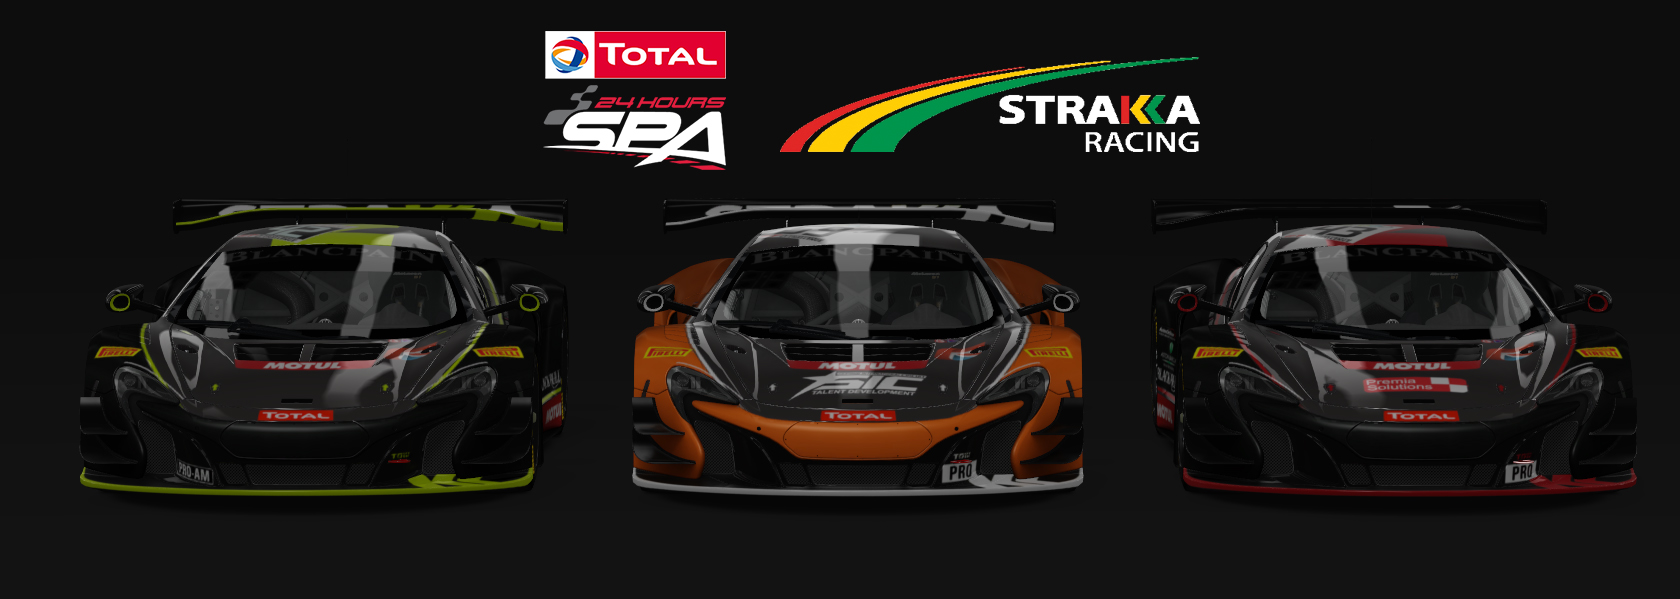 strakka-racing_SPA.jpg